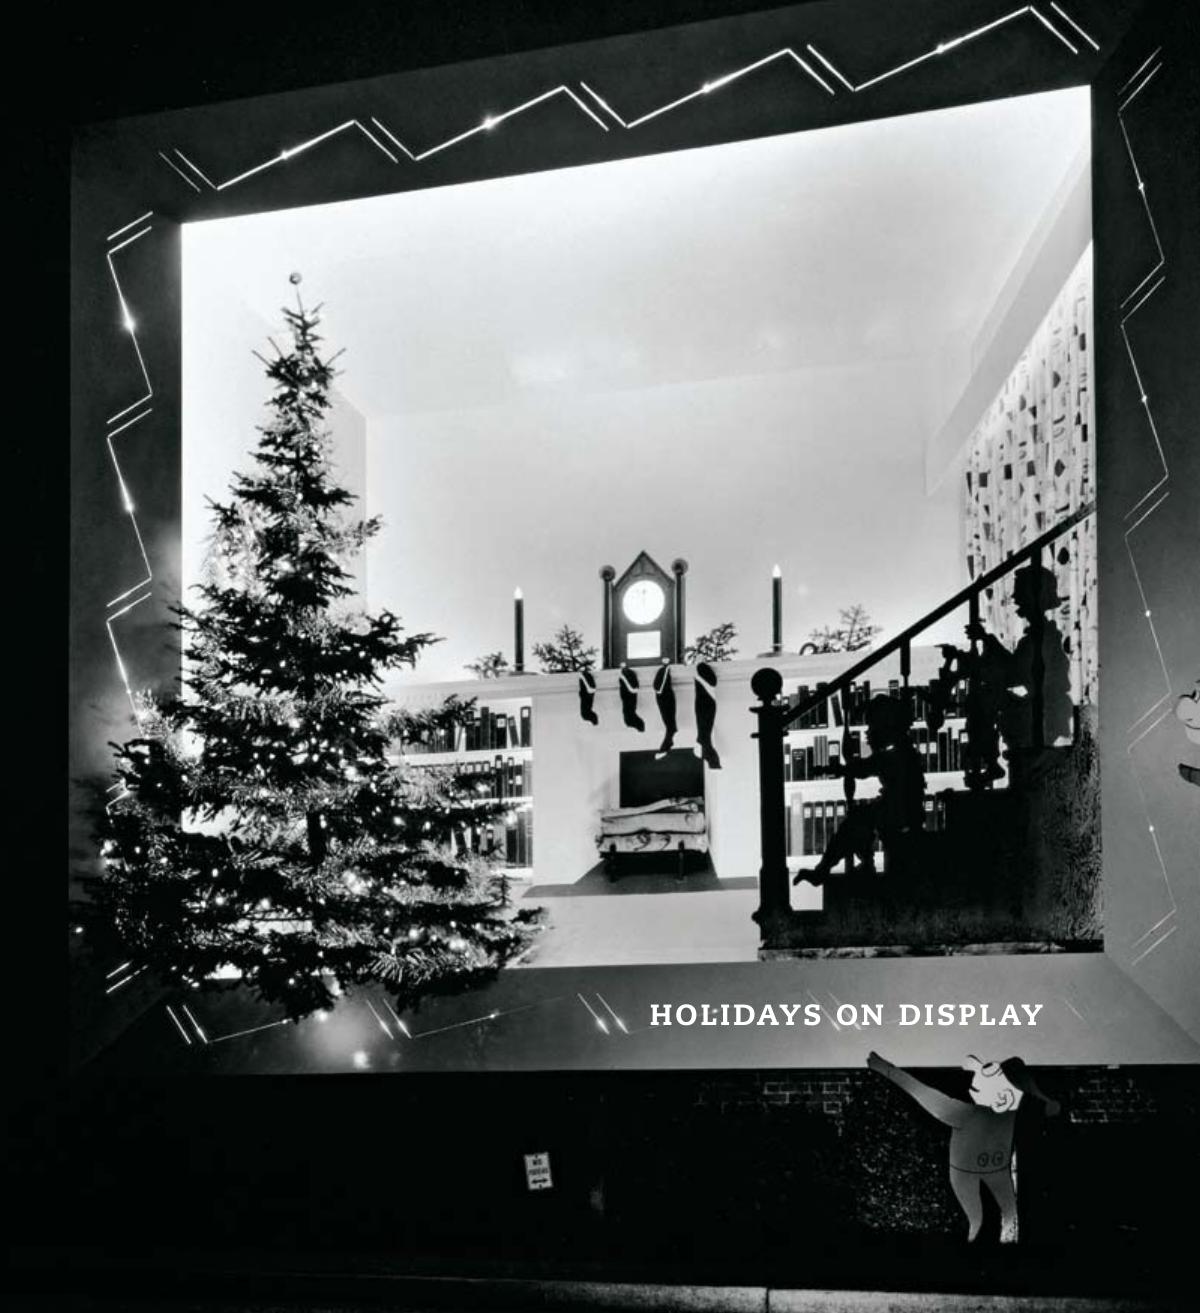 Holidays on Display by William L. Bird